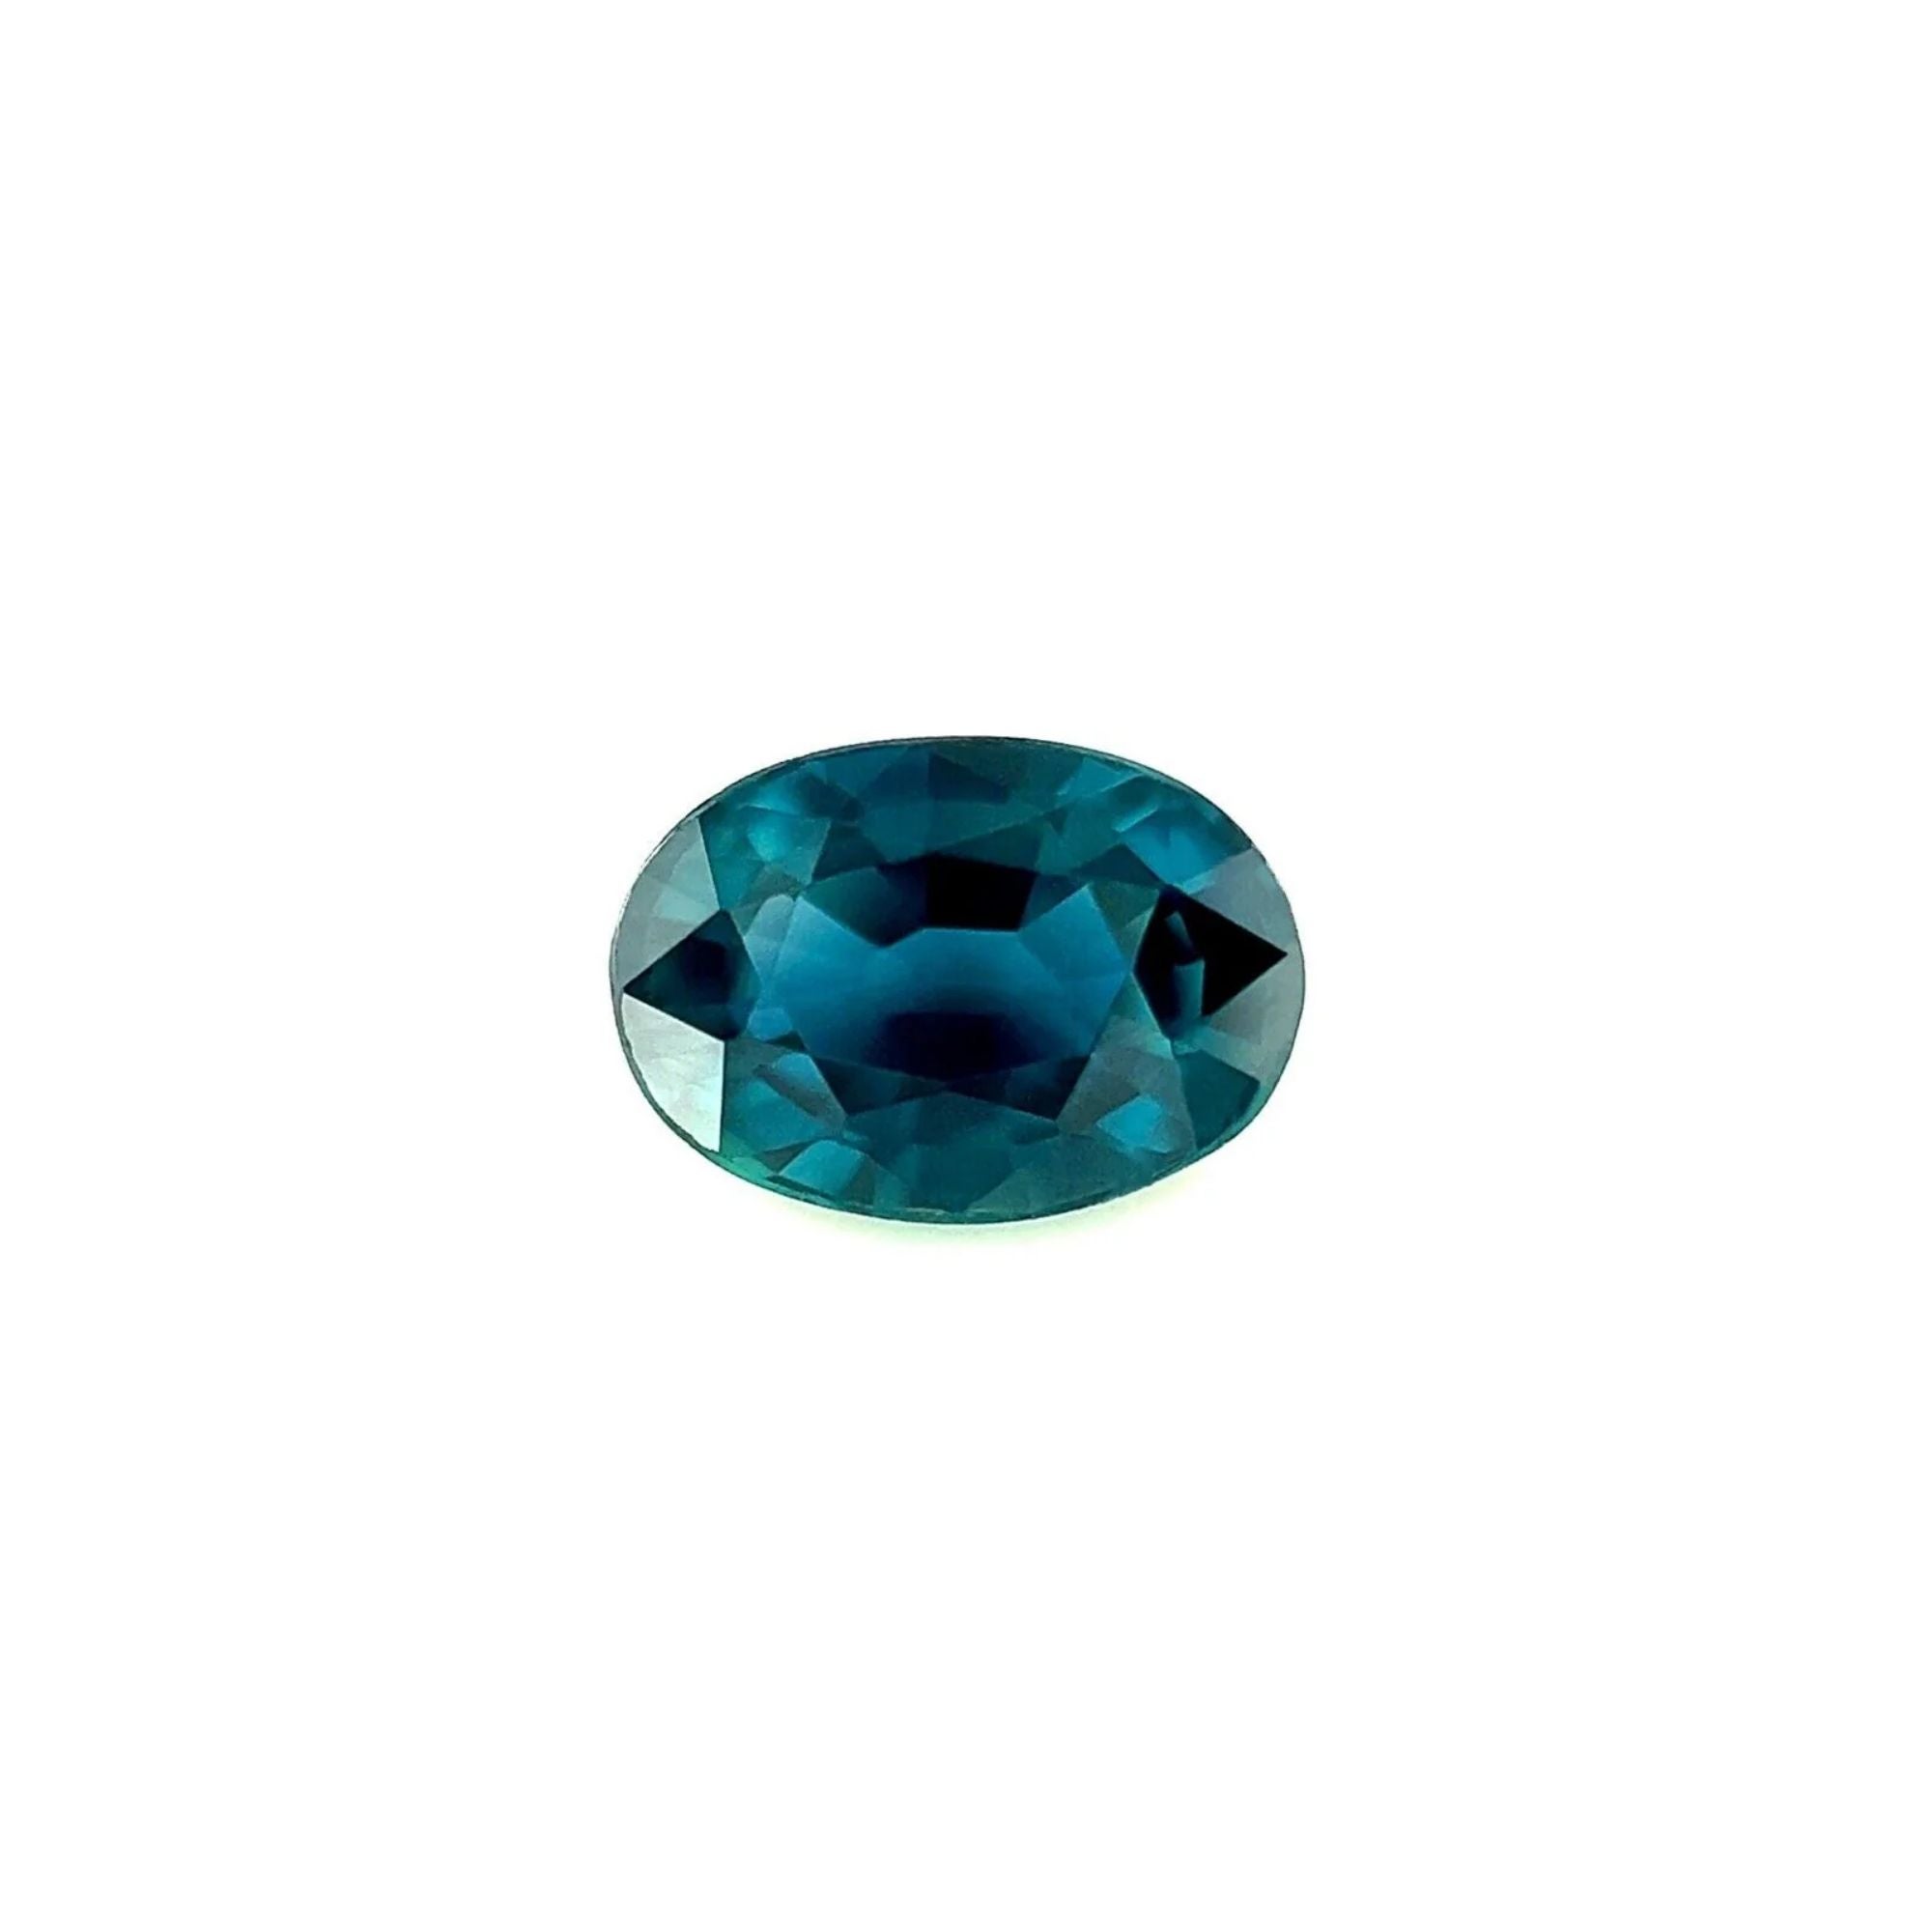 Pierre précieuse rare saphir bleu profond de taille ovale non traitée de 1,14 carat, certifiée GIA